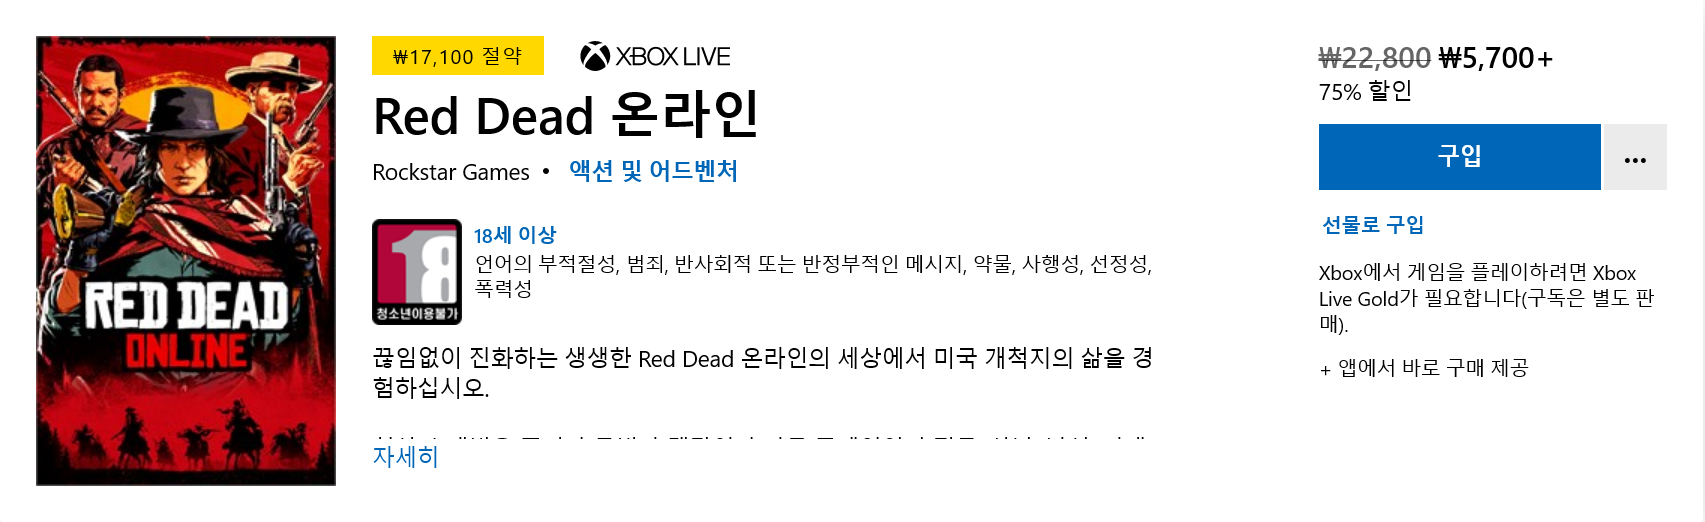 Screenshot_2020-12-02 Red Dead 온라인 구매 - Microsoft Store ko-KR.png